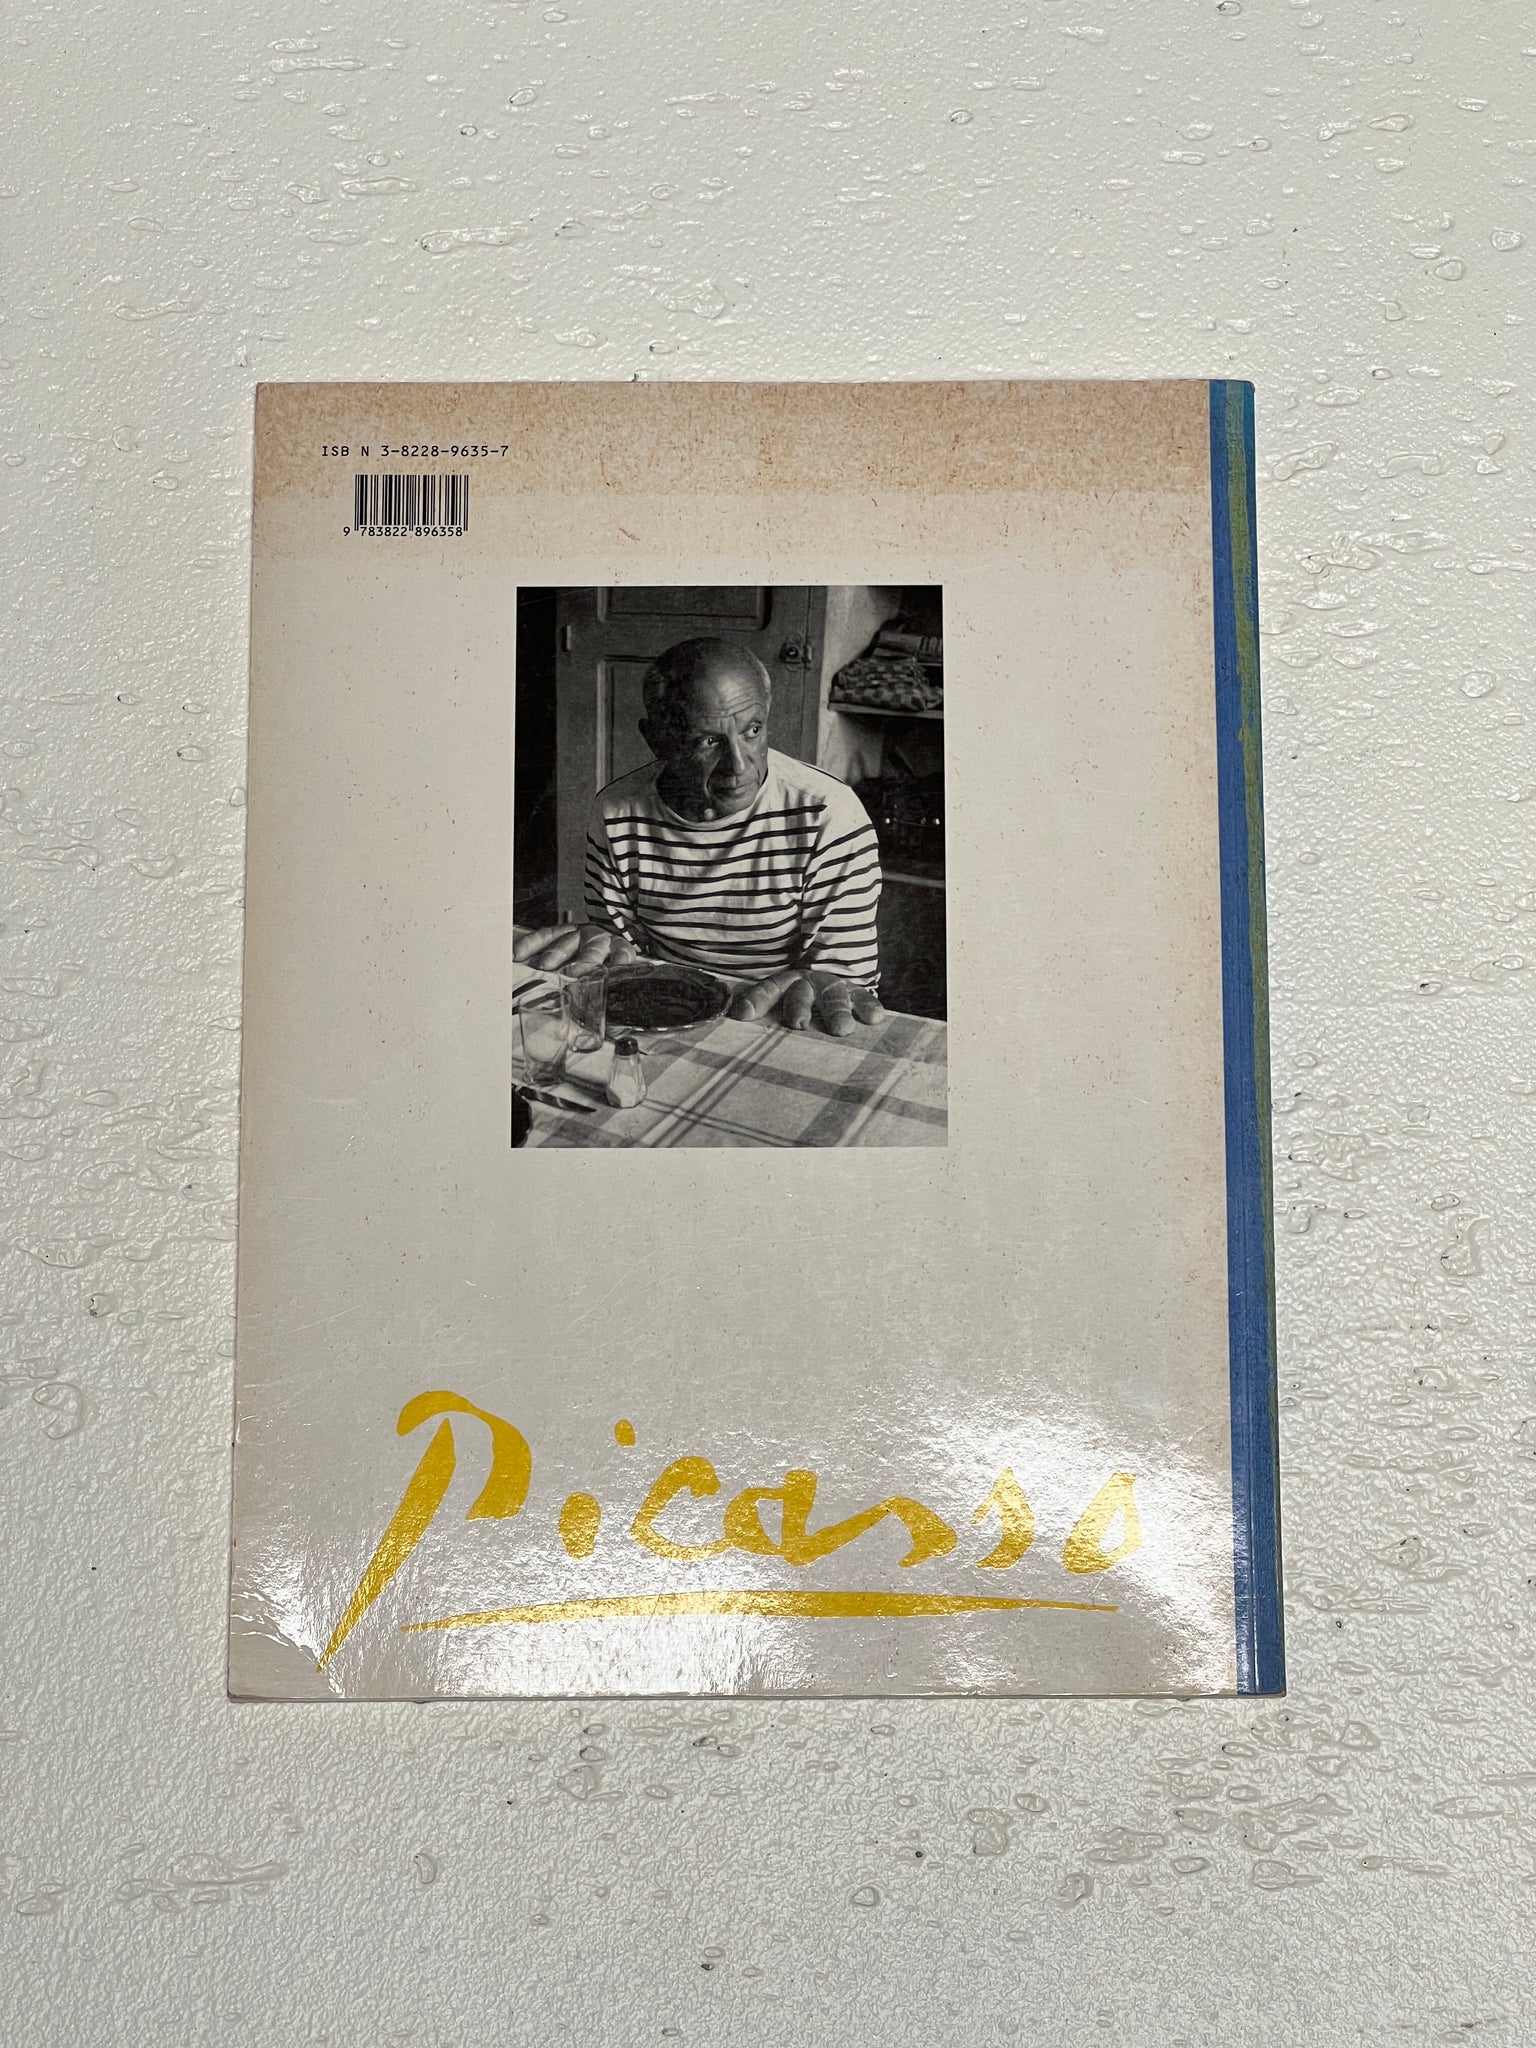 Picasso, 1992